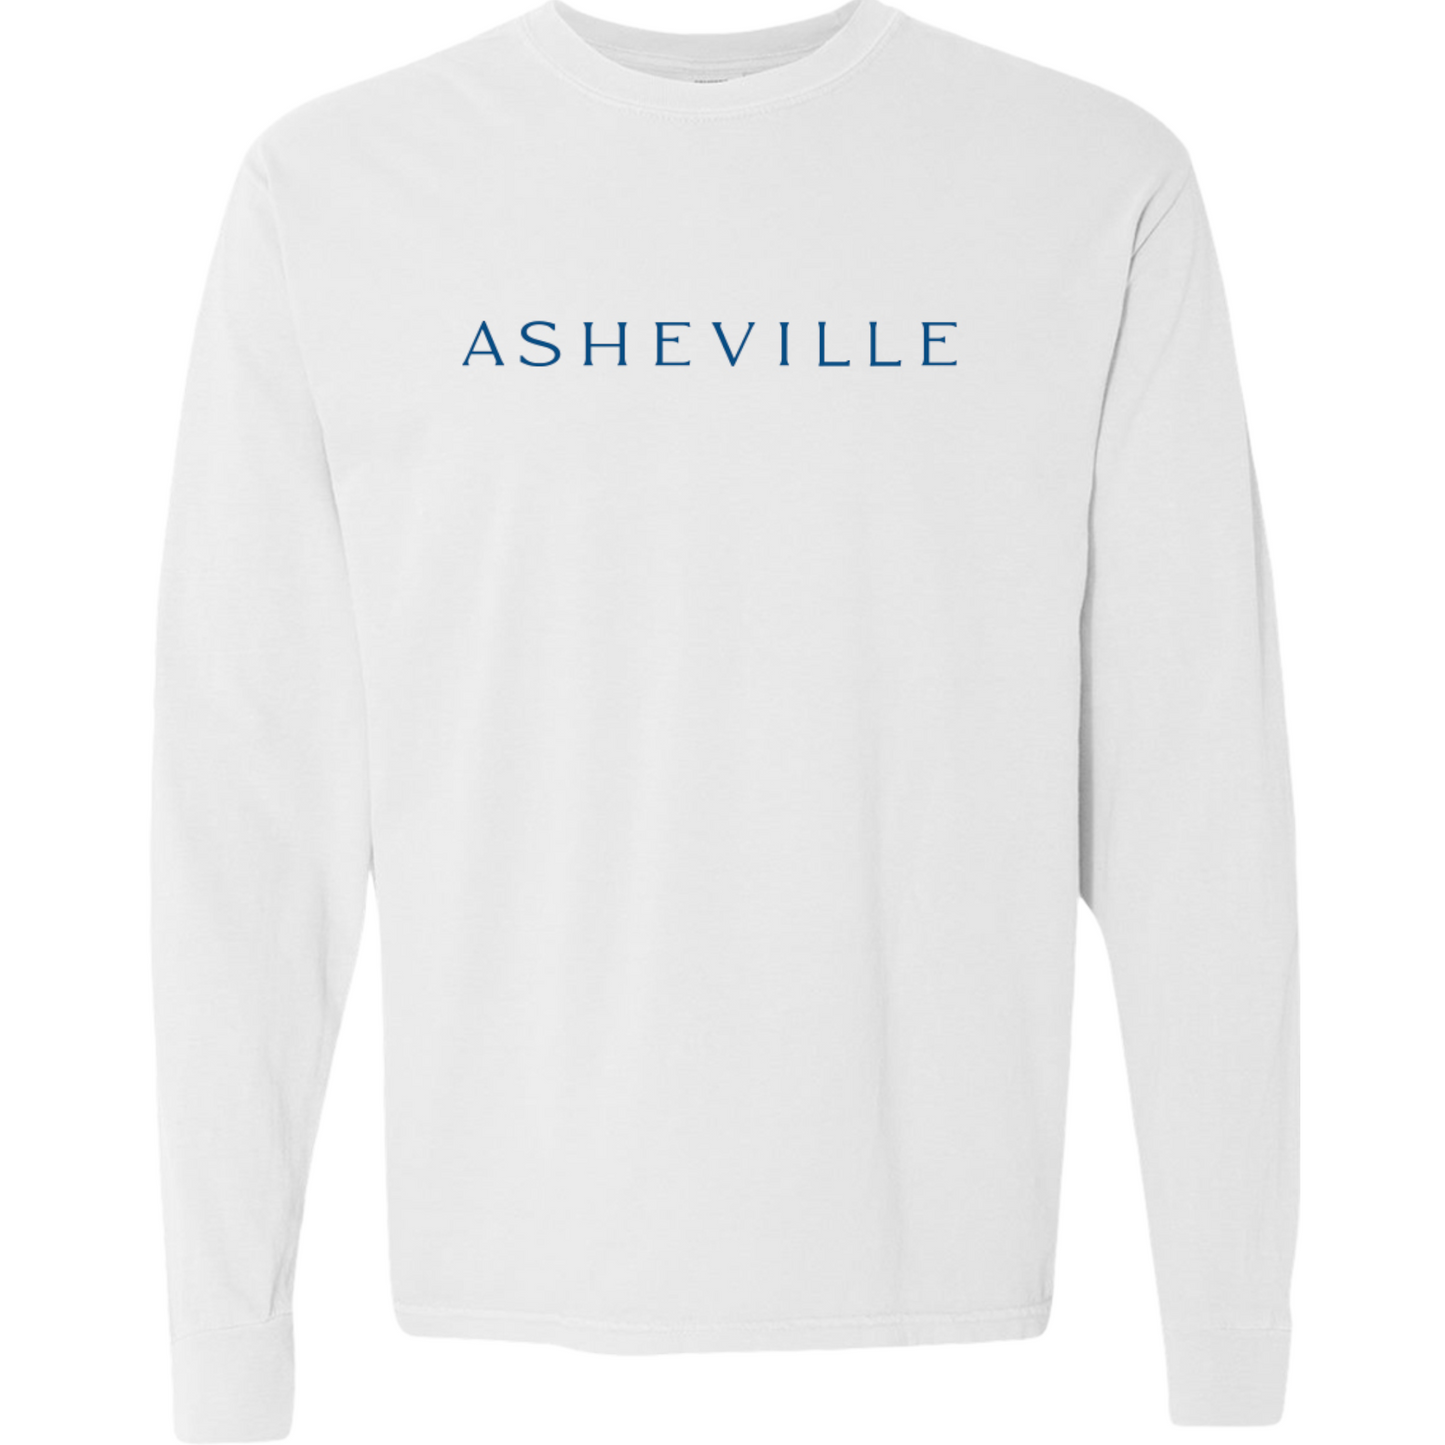 NC Flag Bear Long Sleeve T-Shirt Classic White - The ASHEVILLE Co. TM